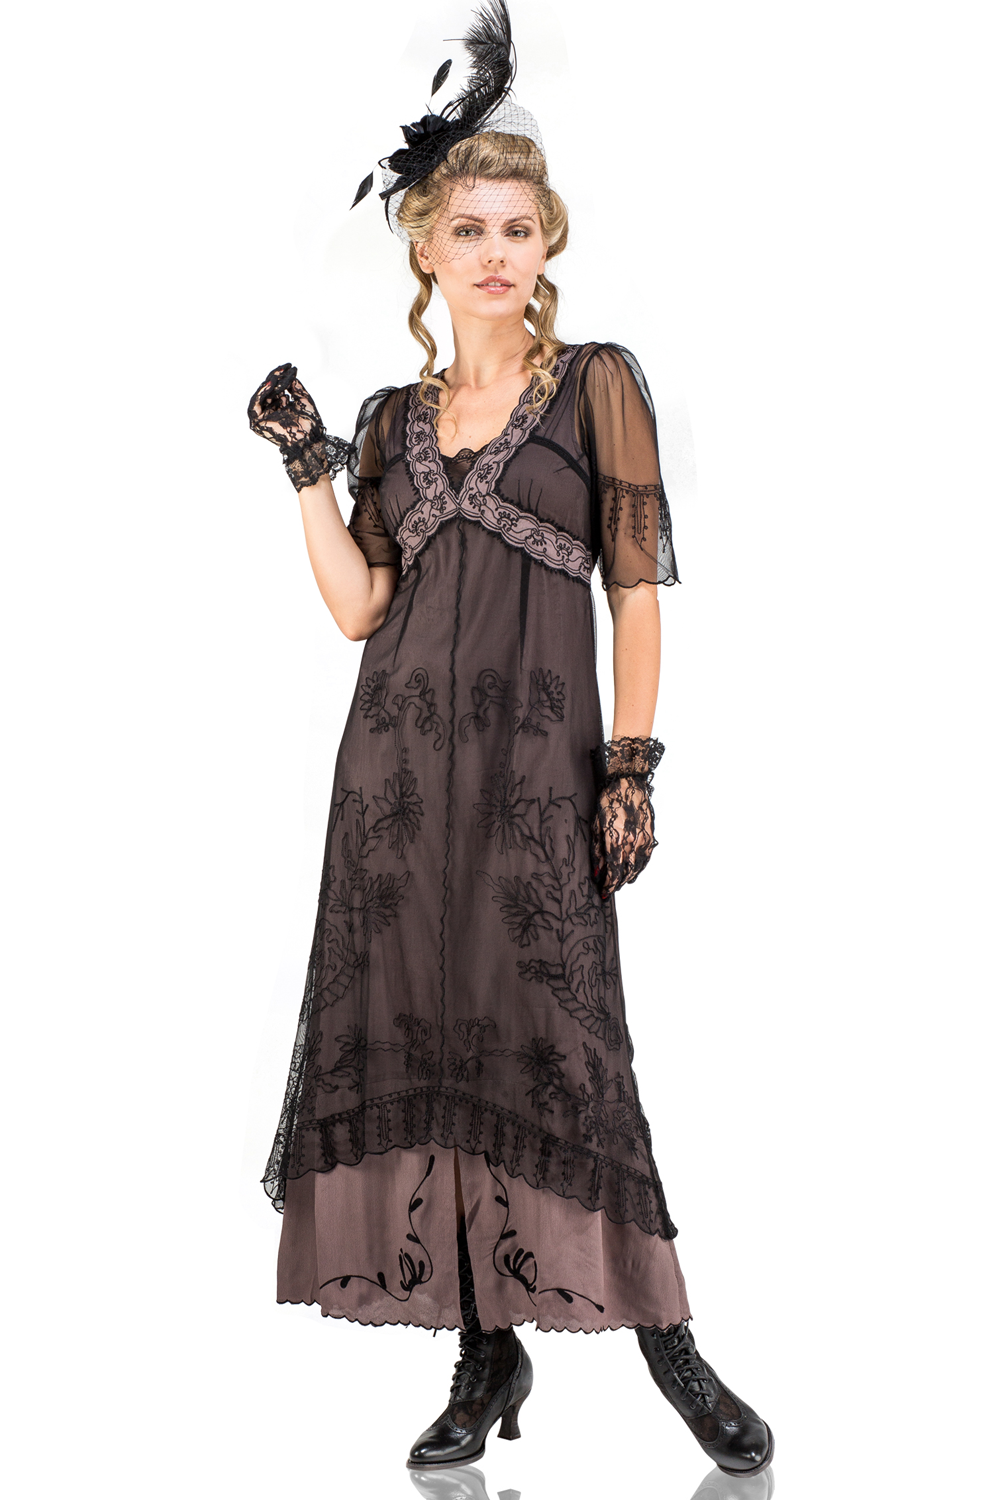 1920s Fashion & Clothing | Roaring 20s Attire New Vintage Titanic Tea Party Dress in Black-Coco by Nataya $249.00 AT vintagedancer.com